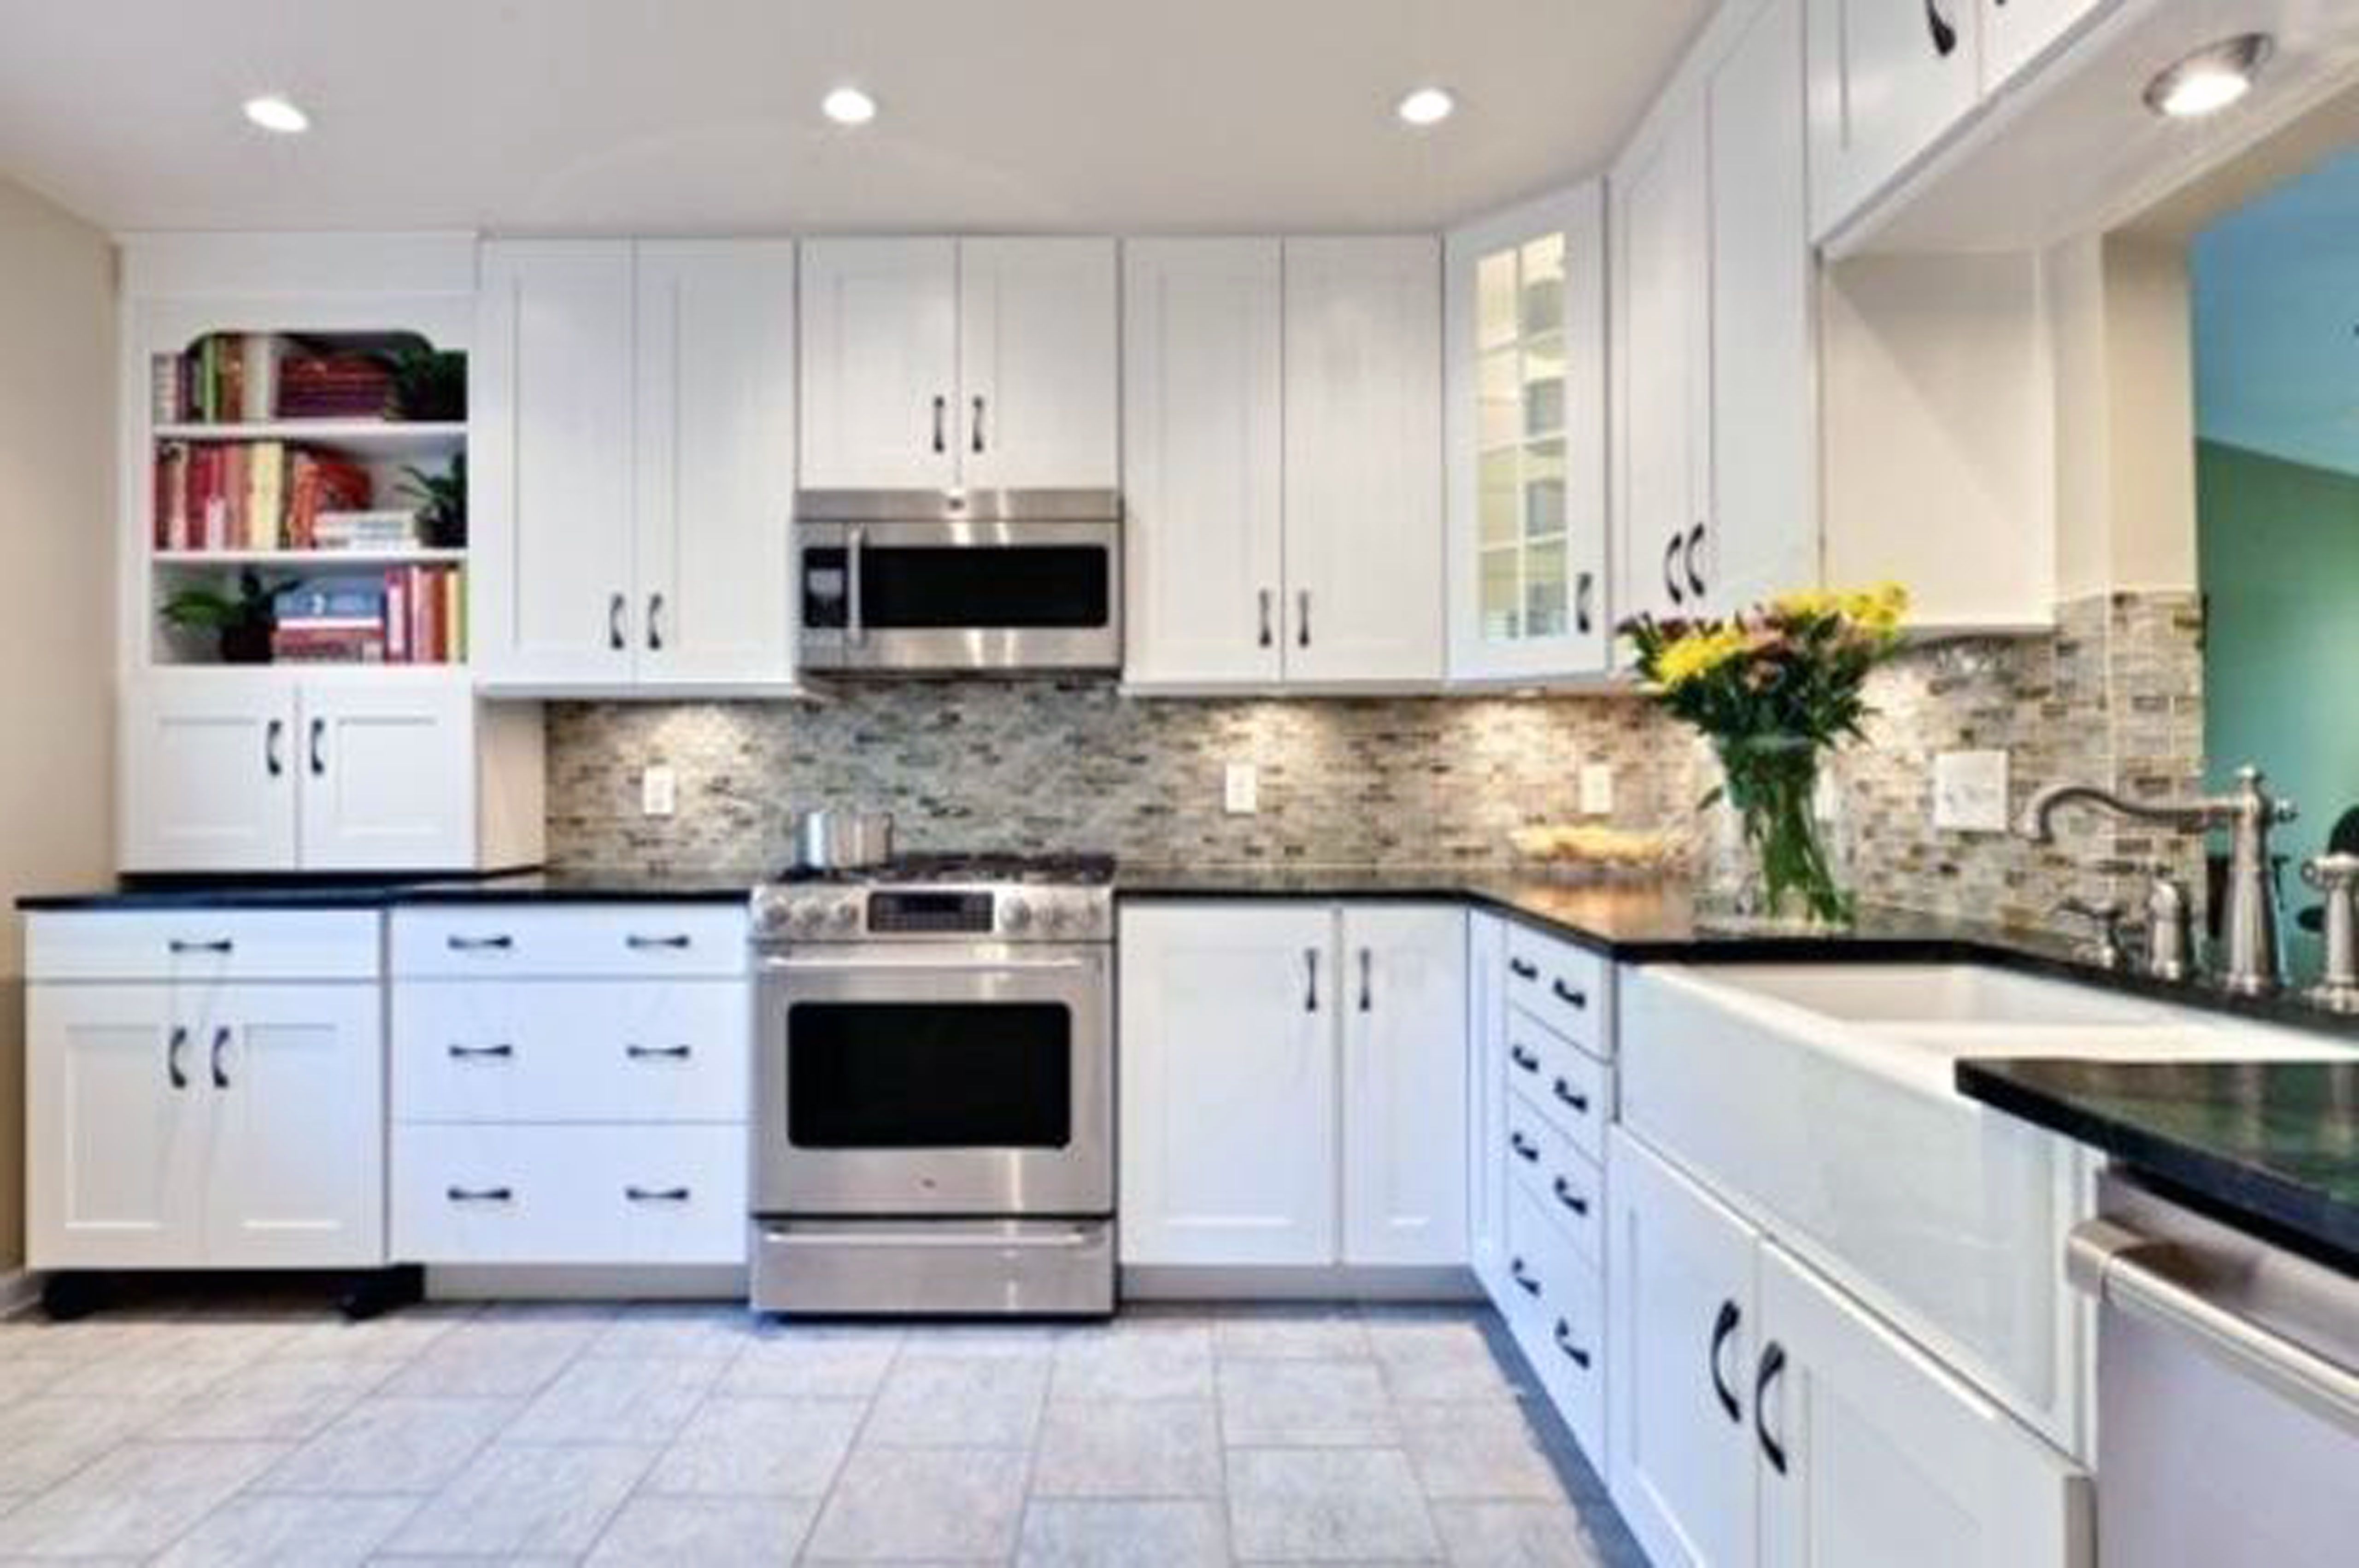 kitchen backsplash ideas with white cabinets ... bookcase a perfect backsplash ideas for white cabinets and KNMGUWF